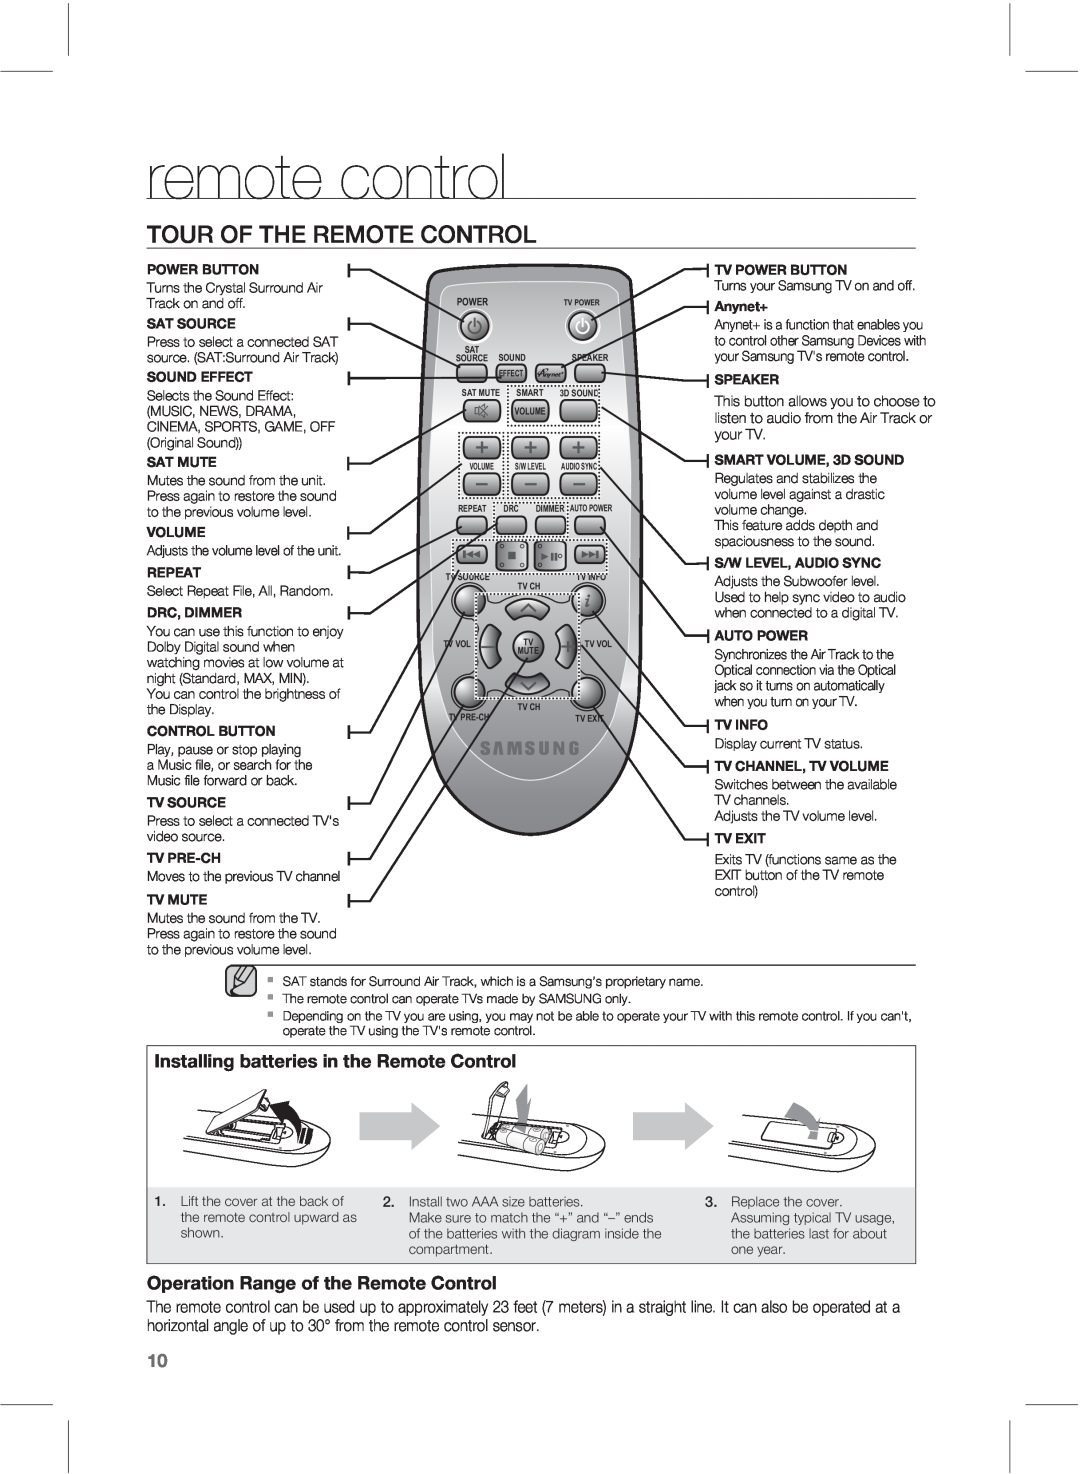 Samsung HWE550 manual remote control, 506305&3&.05&$0/530, OTUBMMJOHCBUUFSJFTJOUIF3FNPUF$POUSPM, ZPVS57 